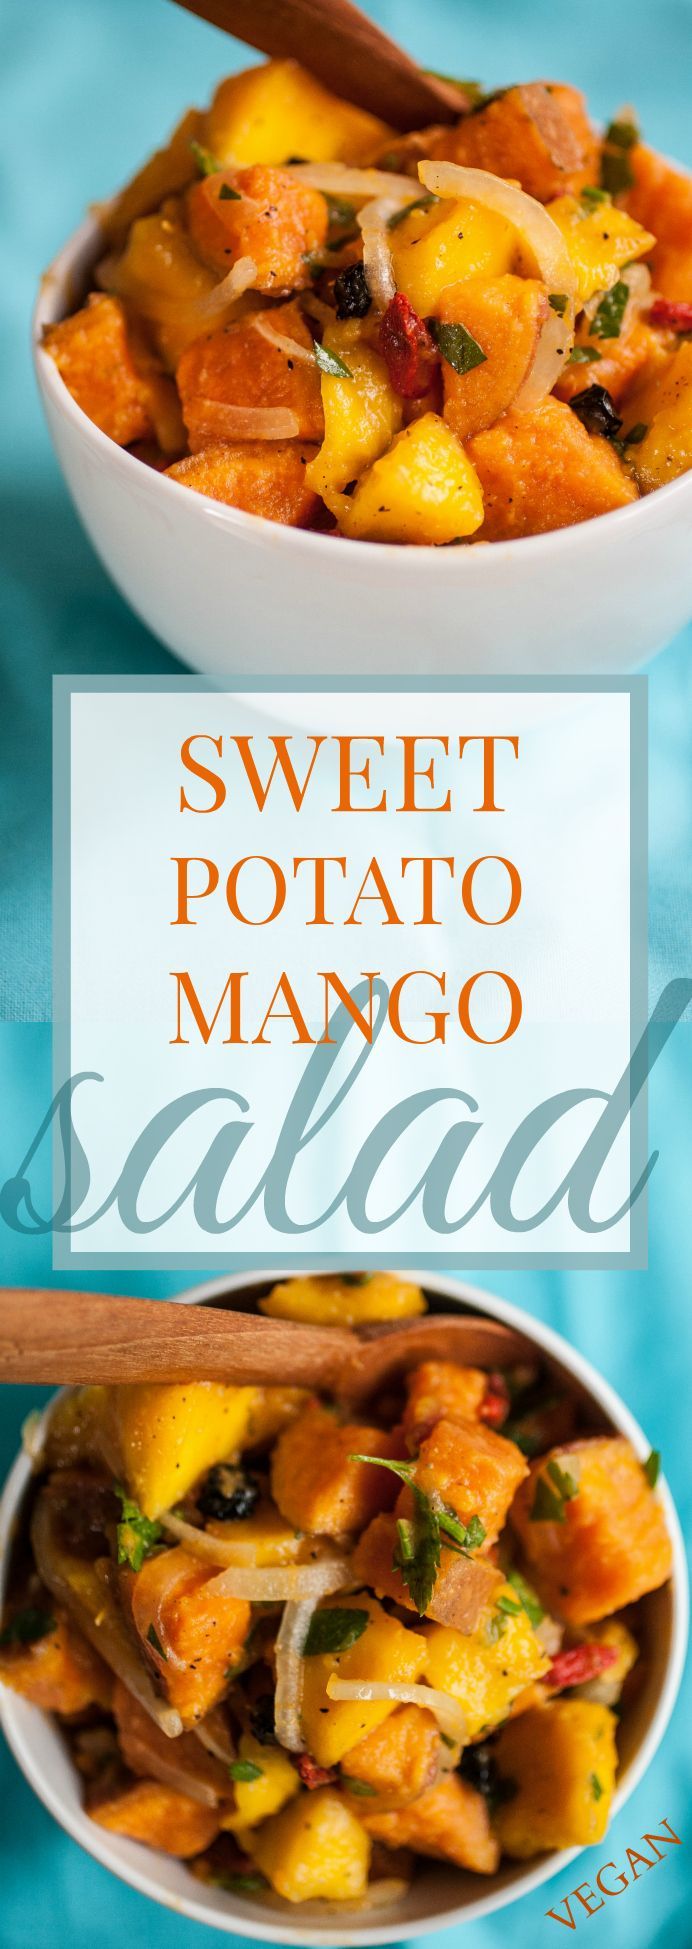 Produce On Parade – Sweet Potato Mango Salad – A delicious spin on regular potato salad. This sweet potato mango salad is studded